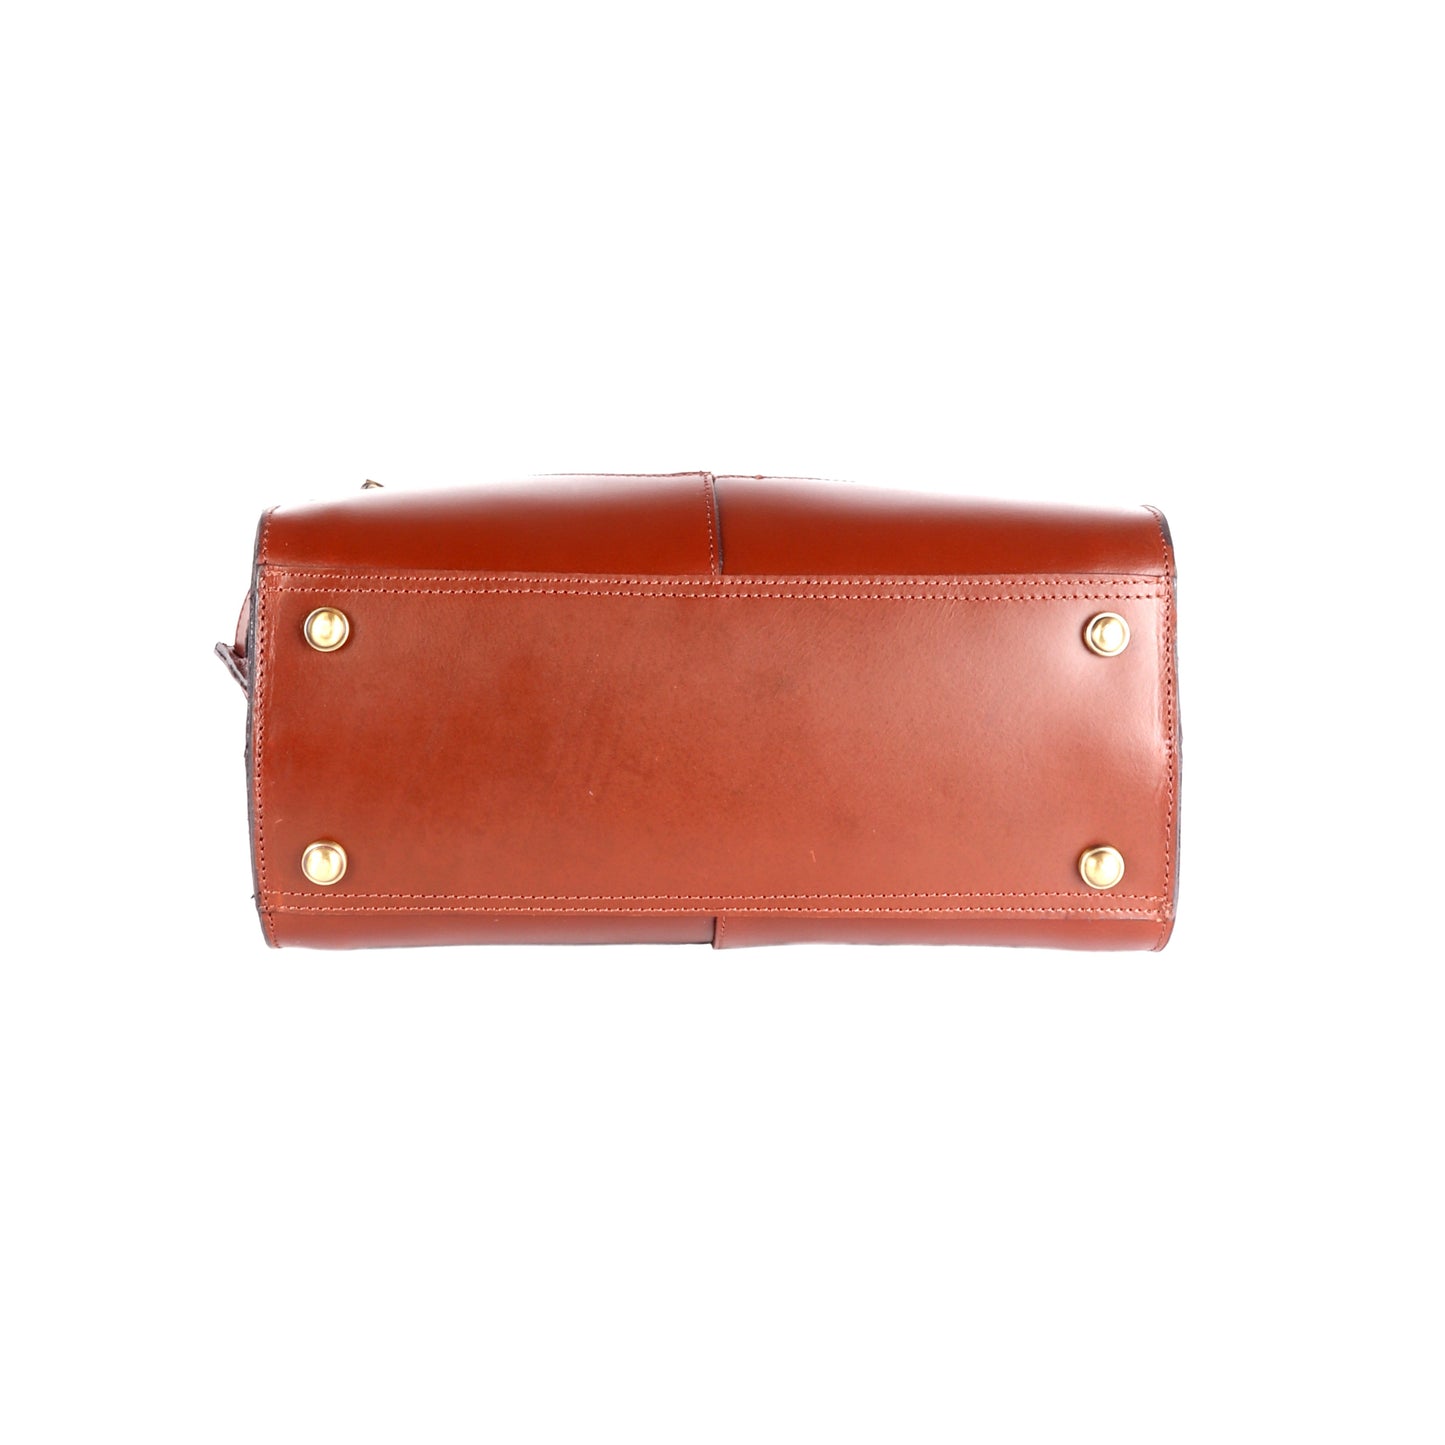 Europa Premium Brown Leather handbag